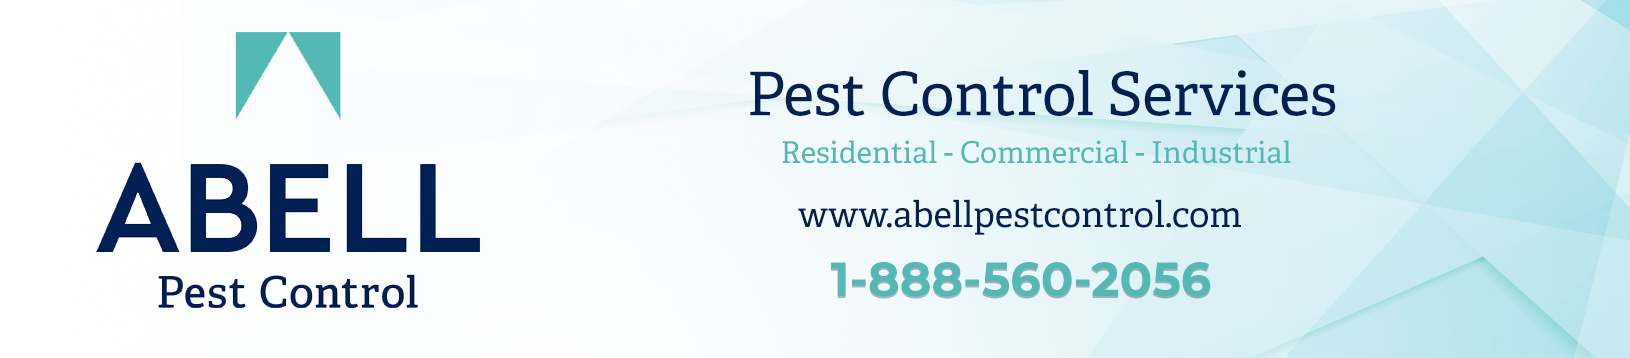 Abell Pest Control Inc.